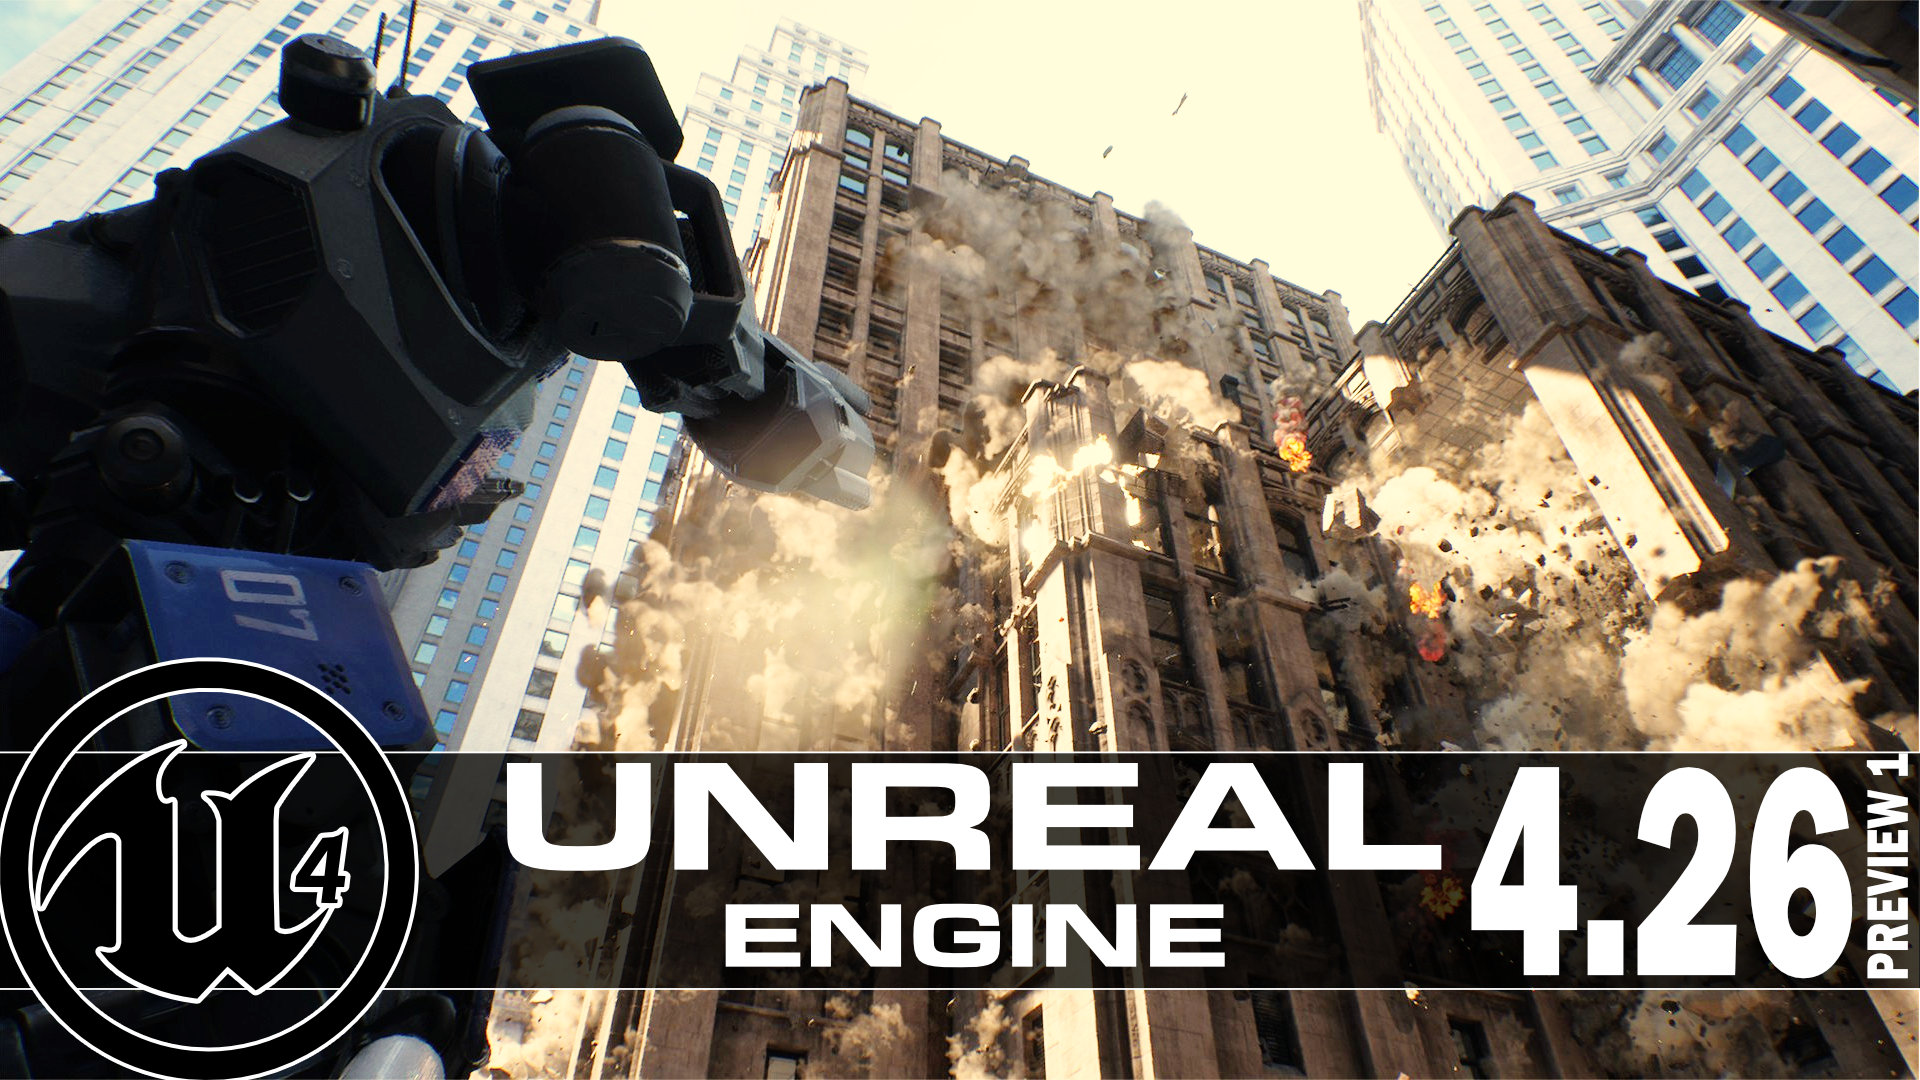 unreal engine 4 free download full version crack